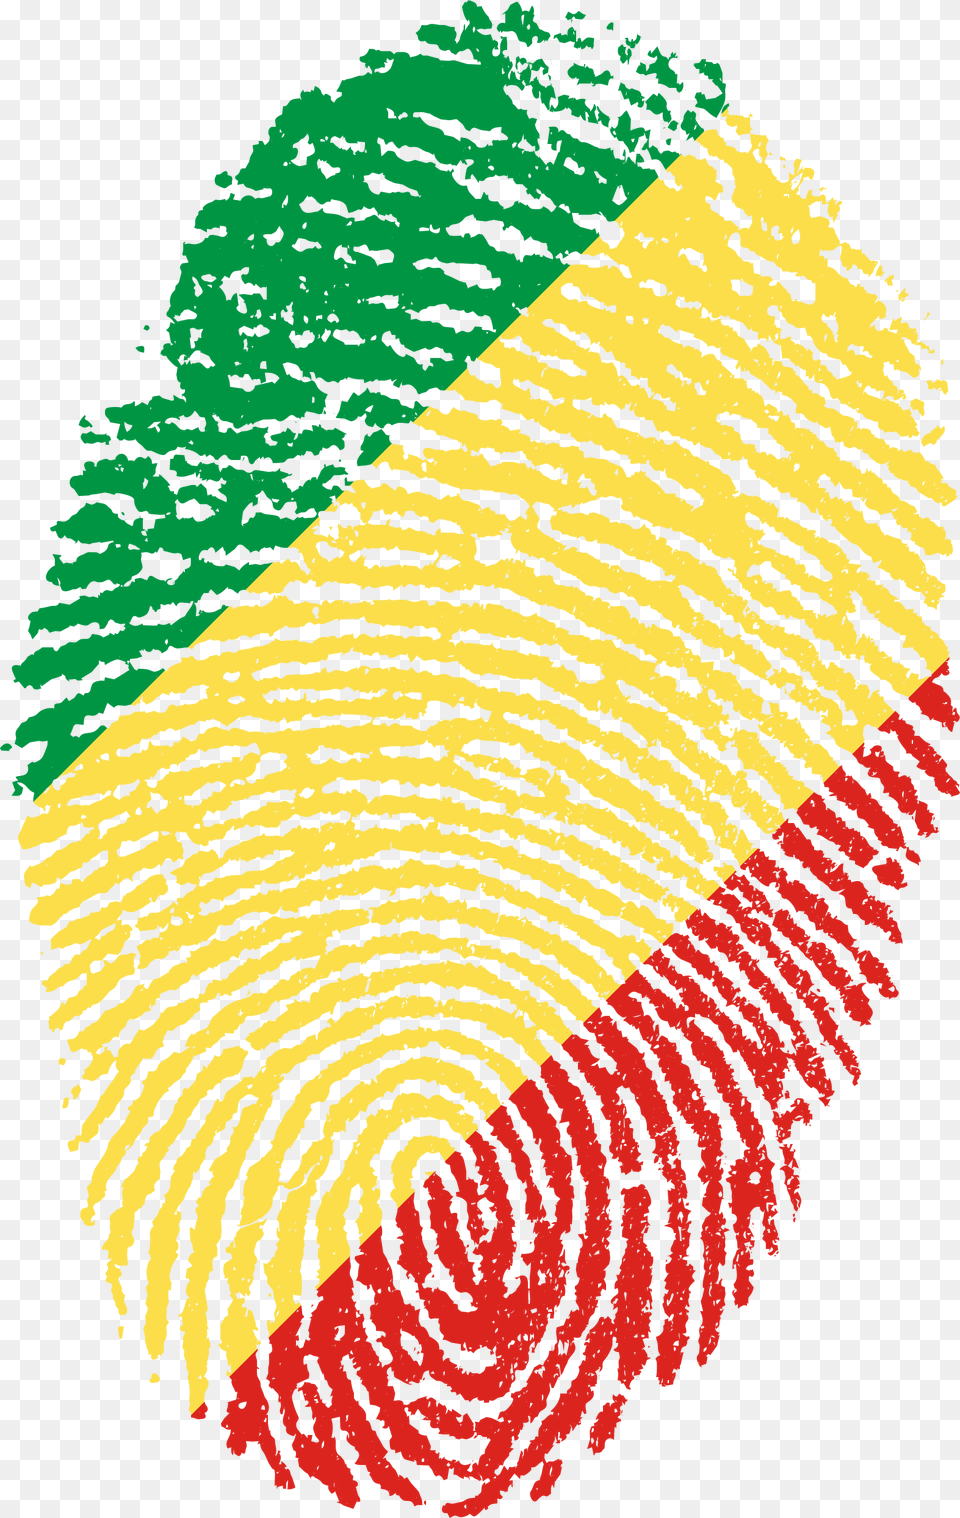 Congo Flag Fingerprint Country Country Fingerprint, Home Decor, Art, Graphics, Rug Png Image